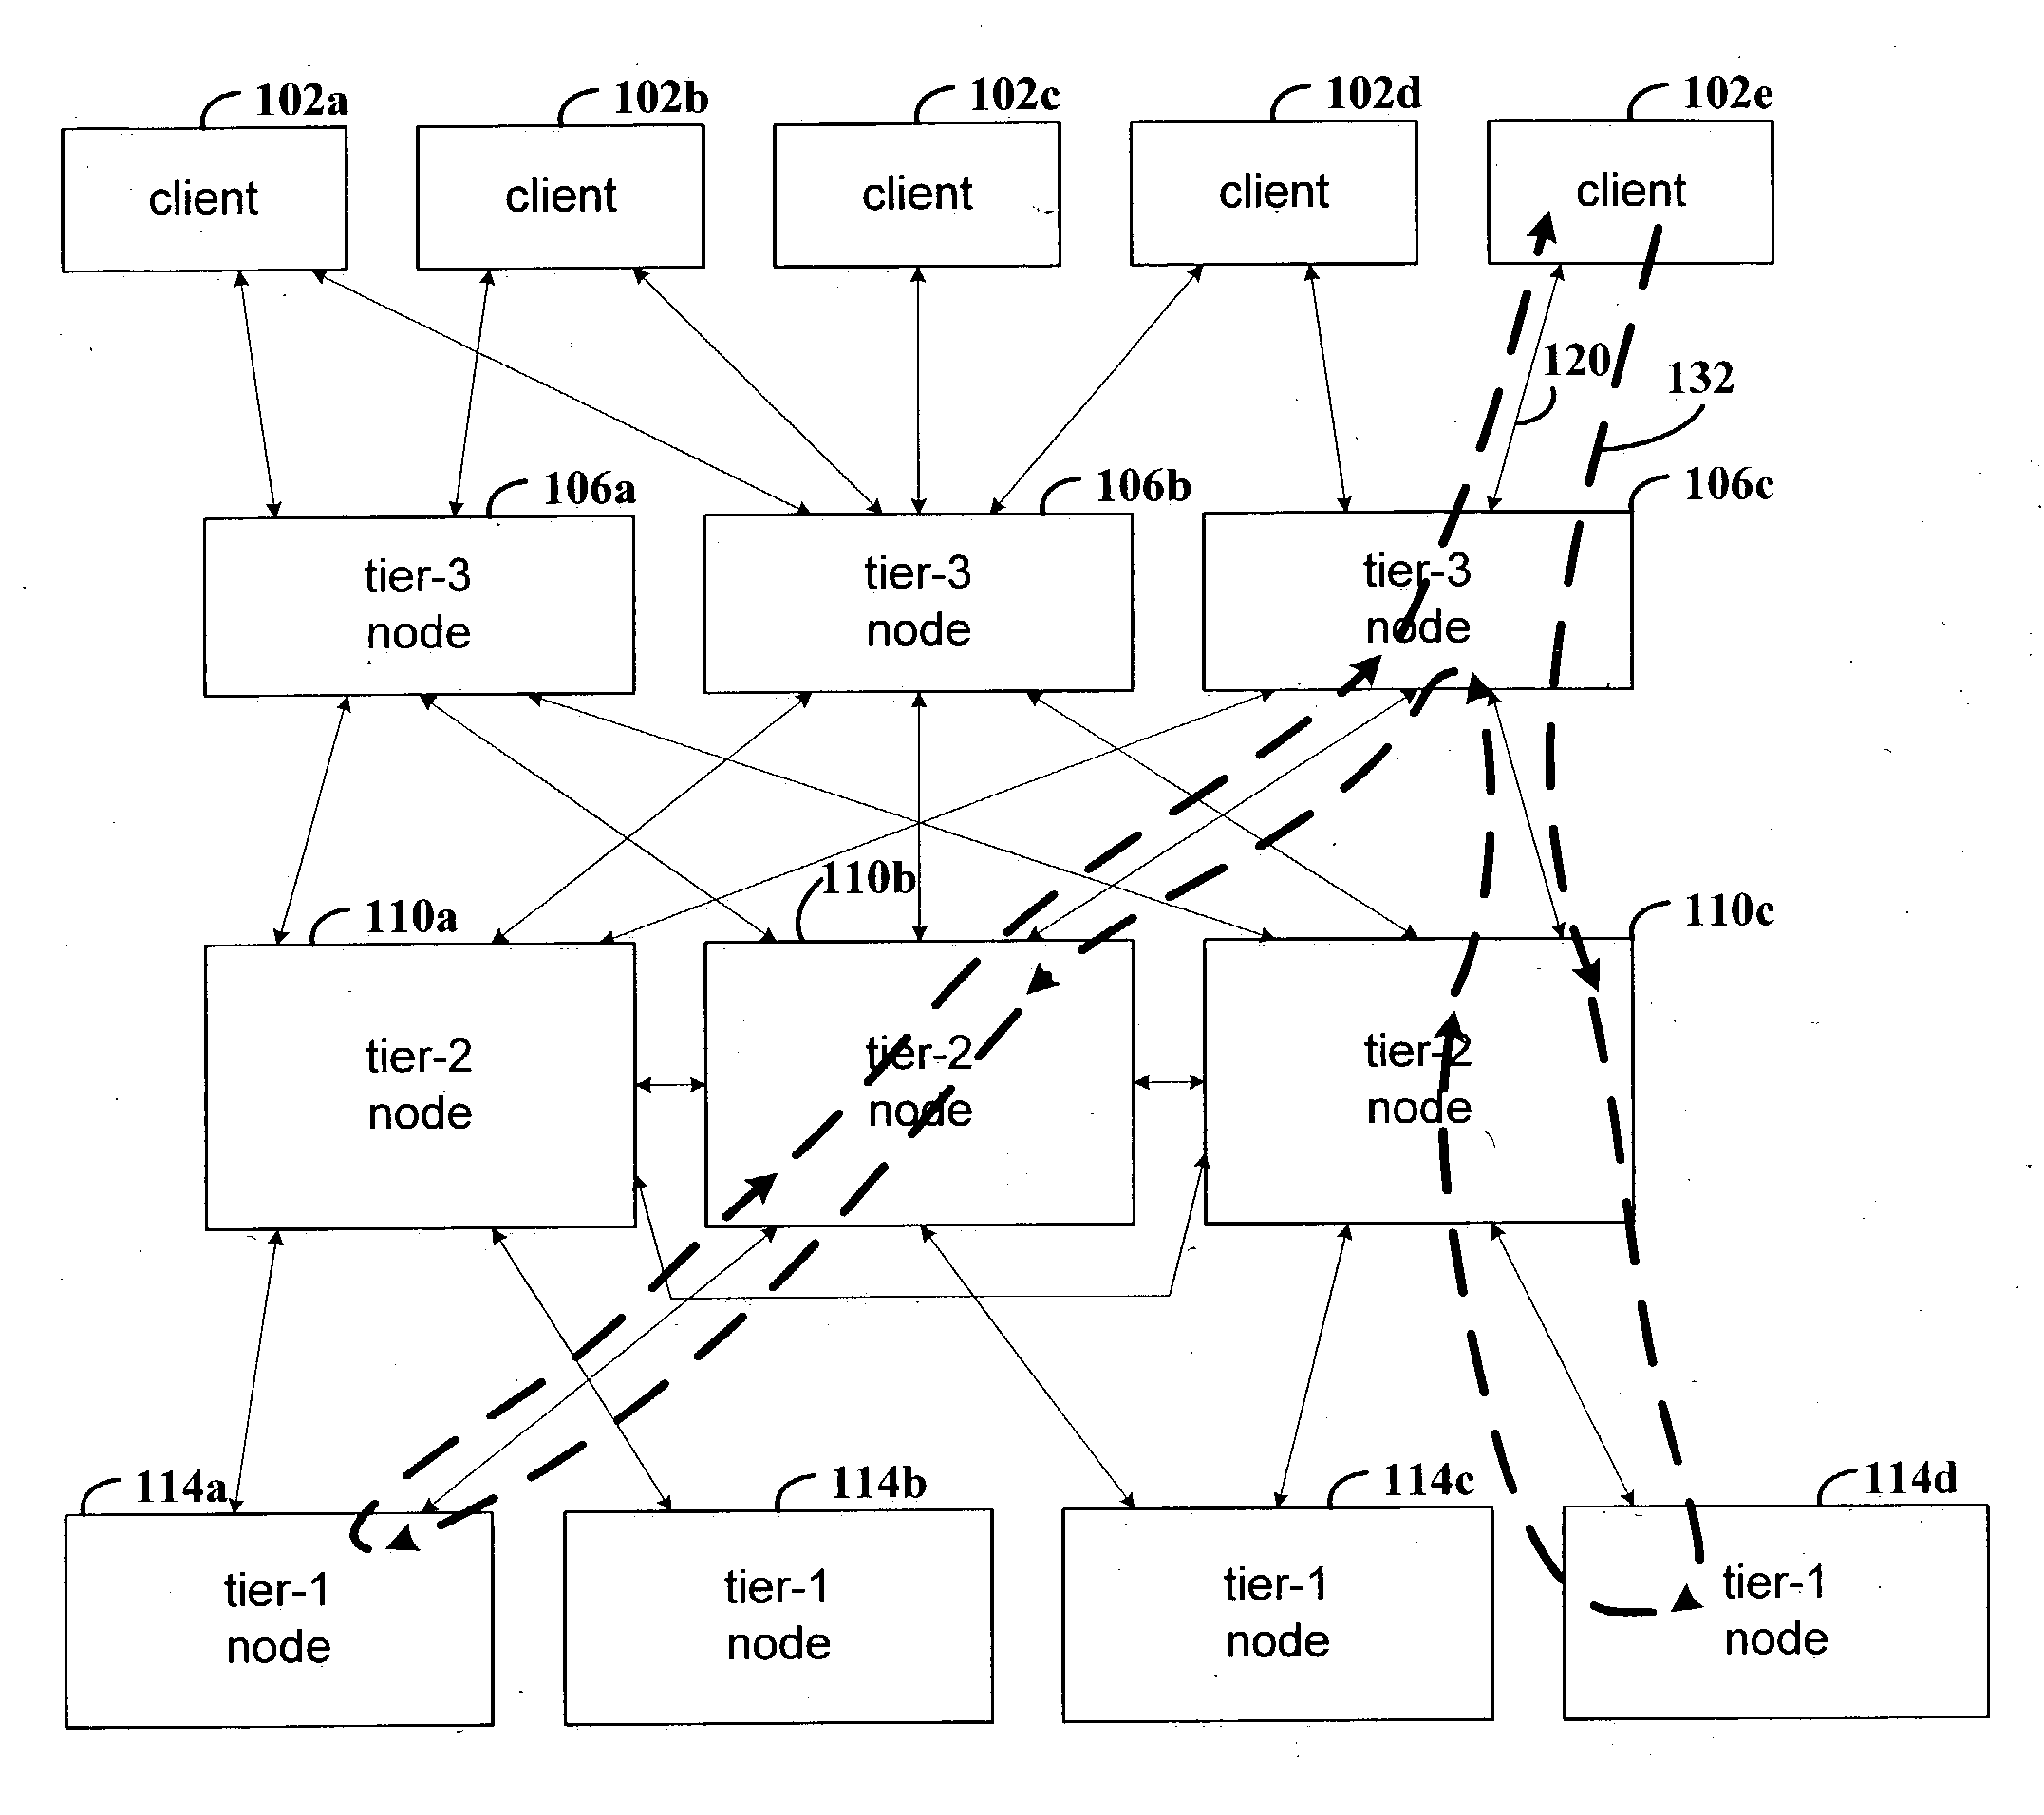 Analysis of causal relations between intercommunicating nodes